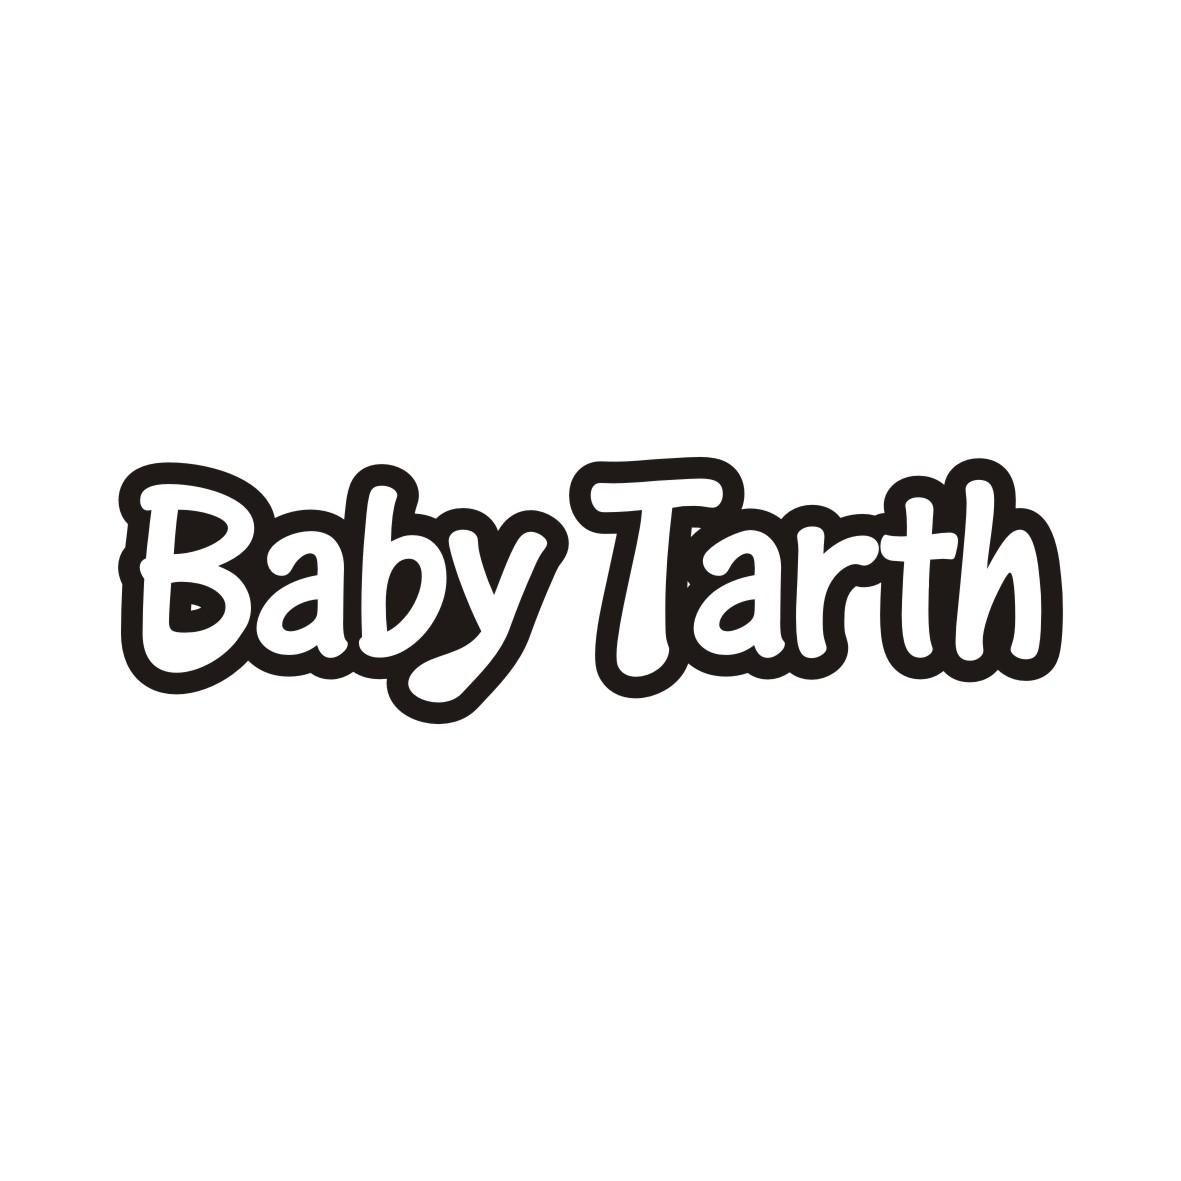 BABY TARTH商标转让